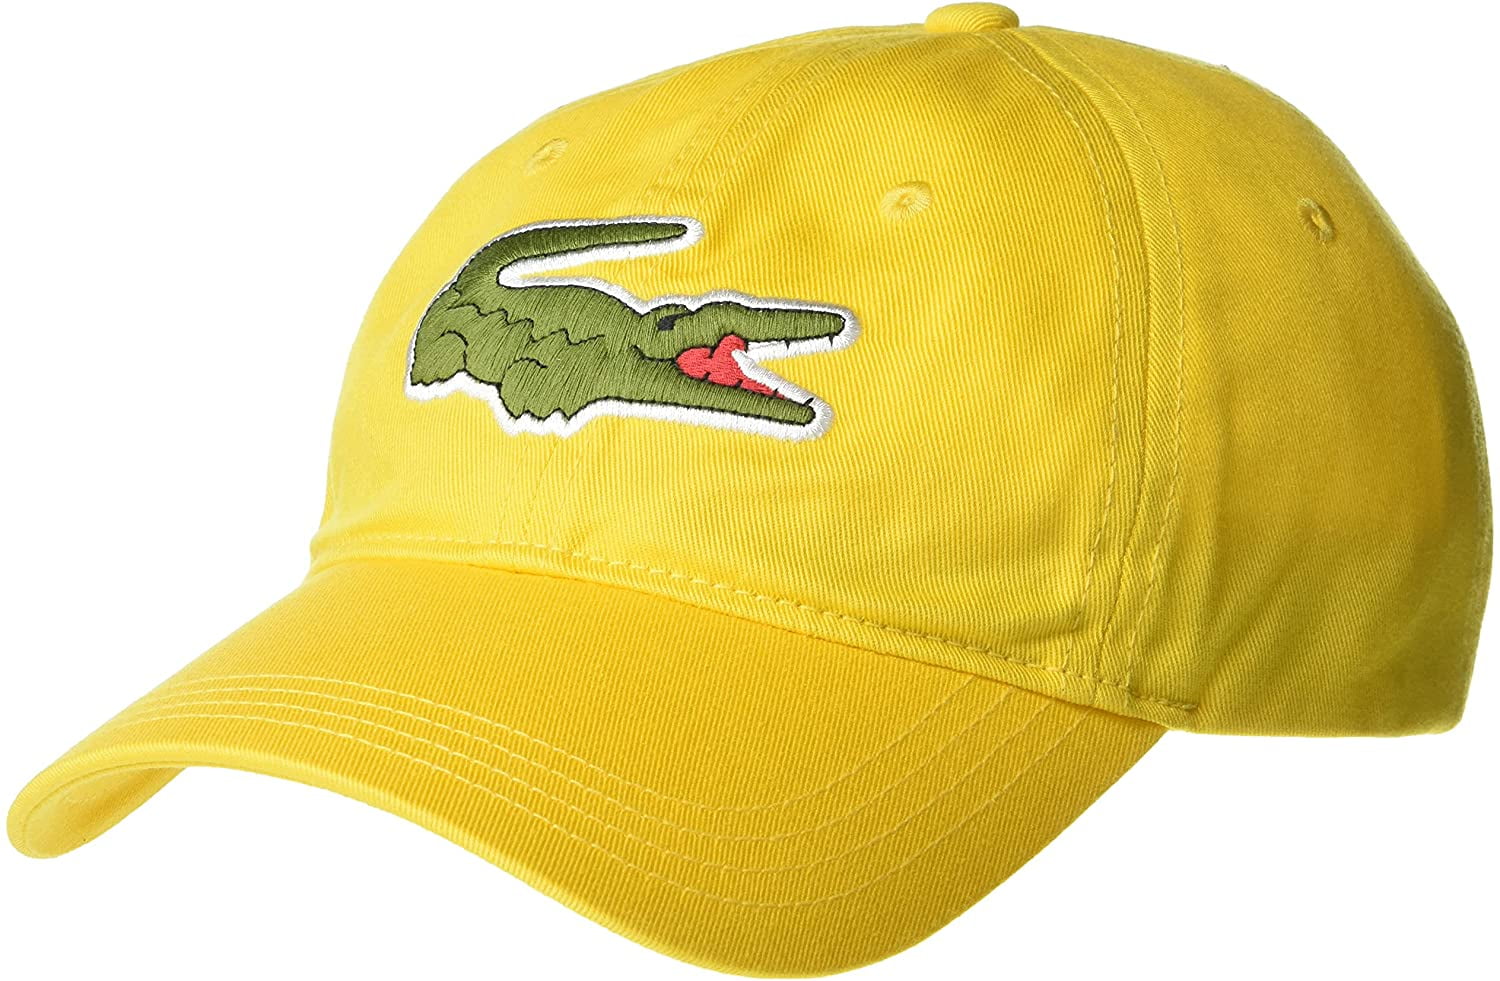 Lacoste Mens Big Twill Adjustable Strap Hat Size Cornmeal Yellow - Walmart.com